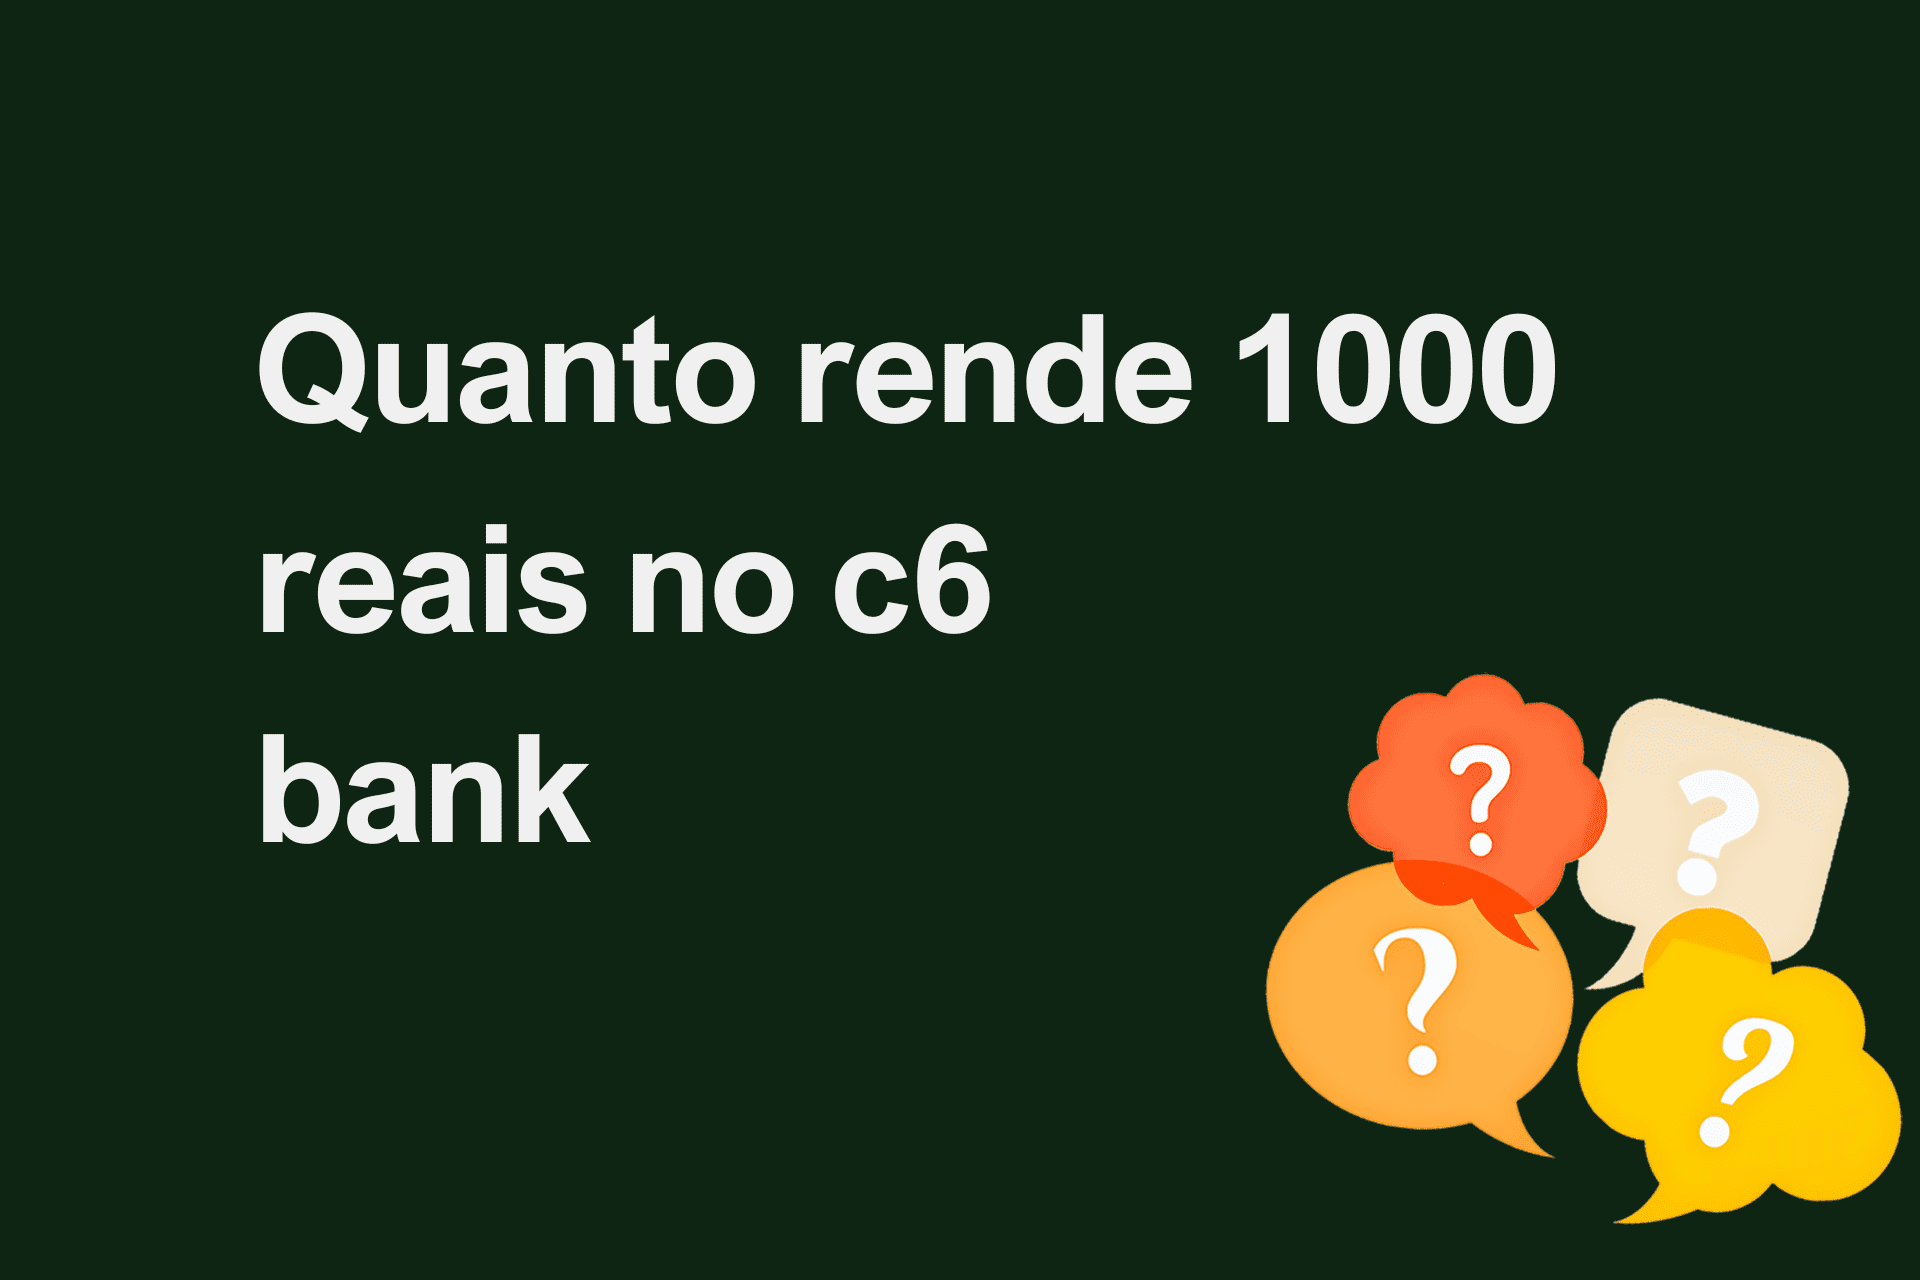 Quanto rende 1000 reais no c6 bank?